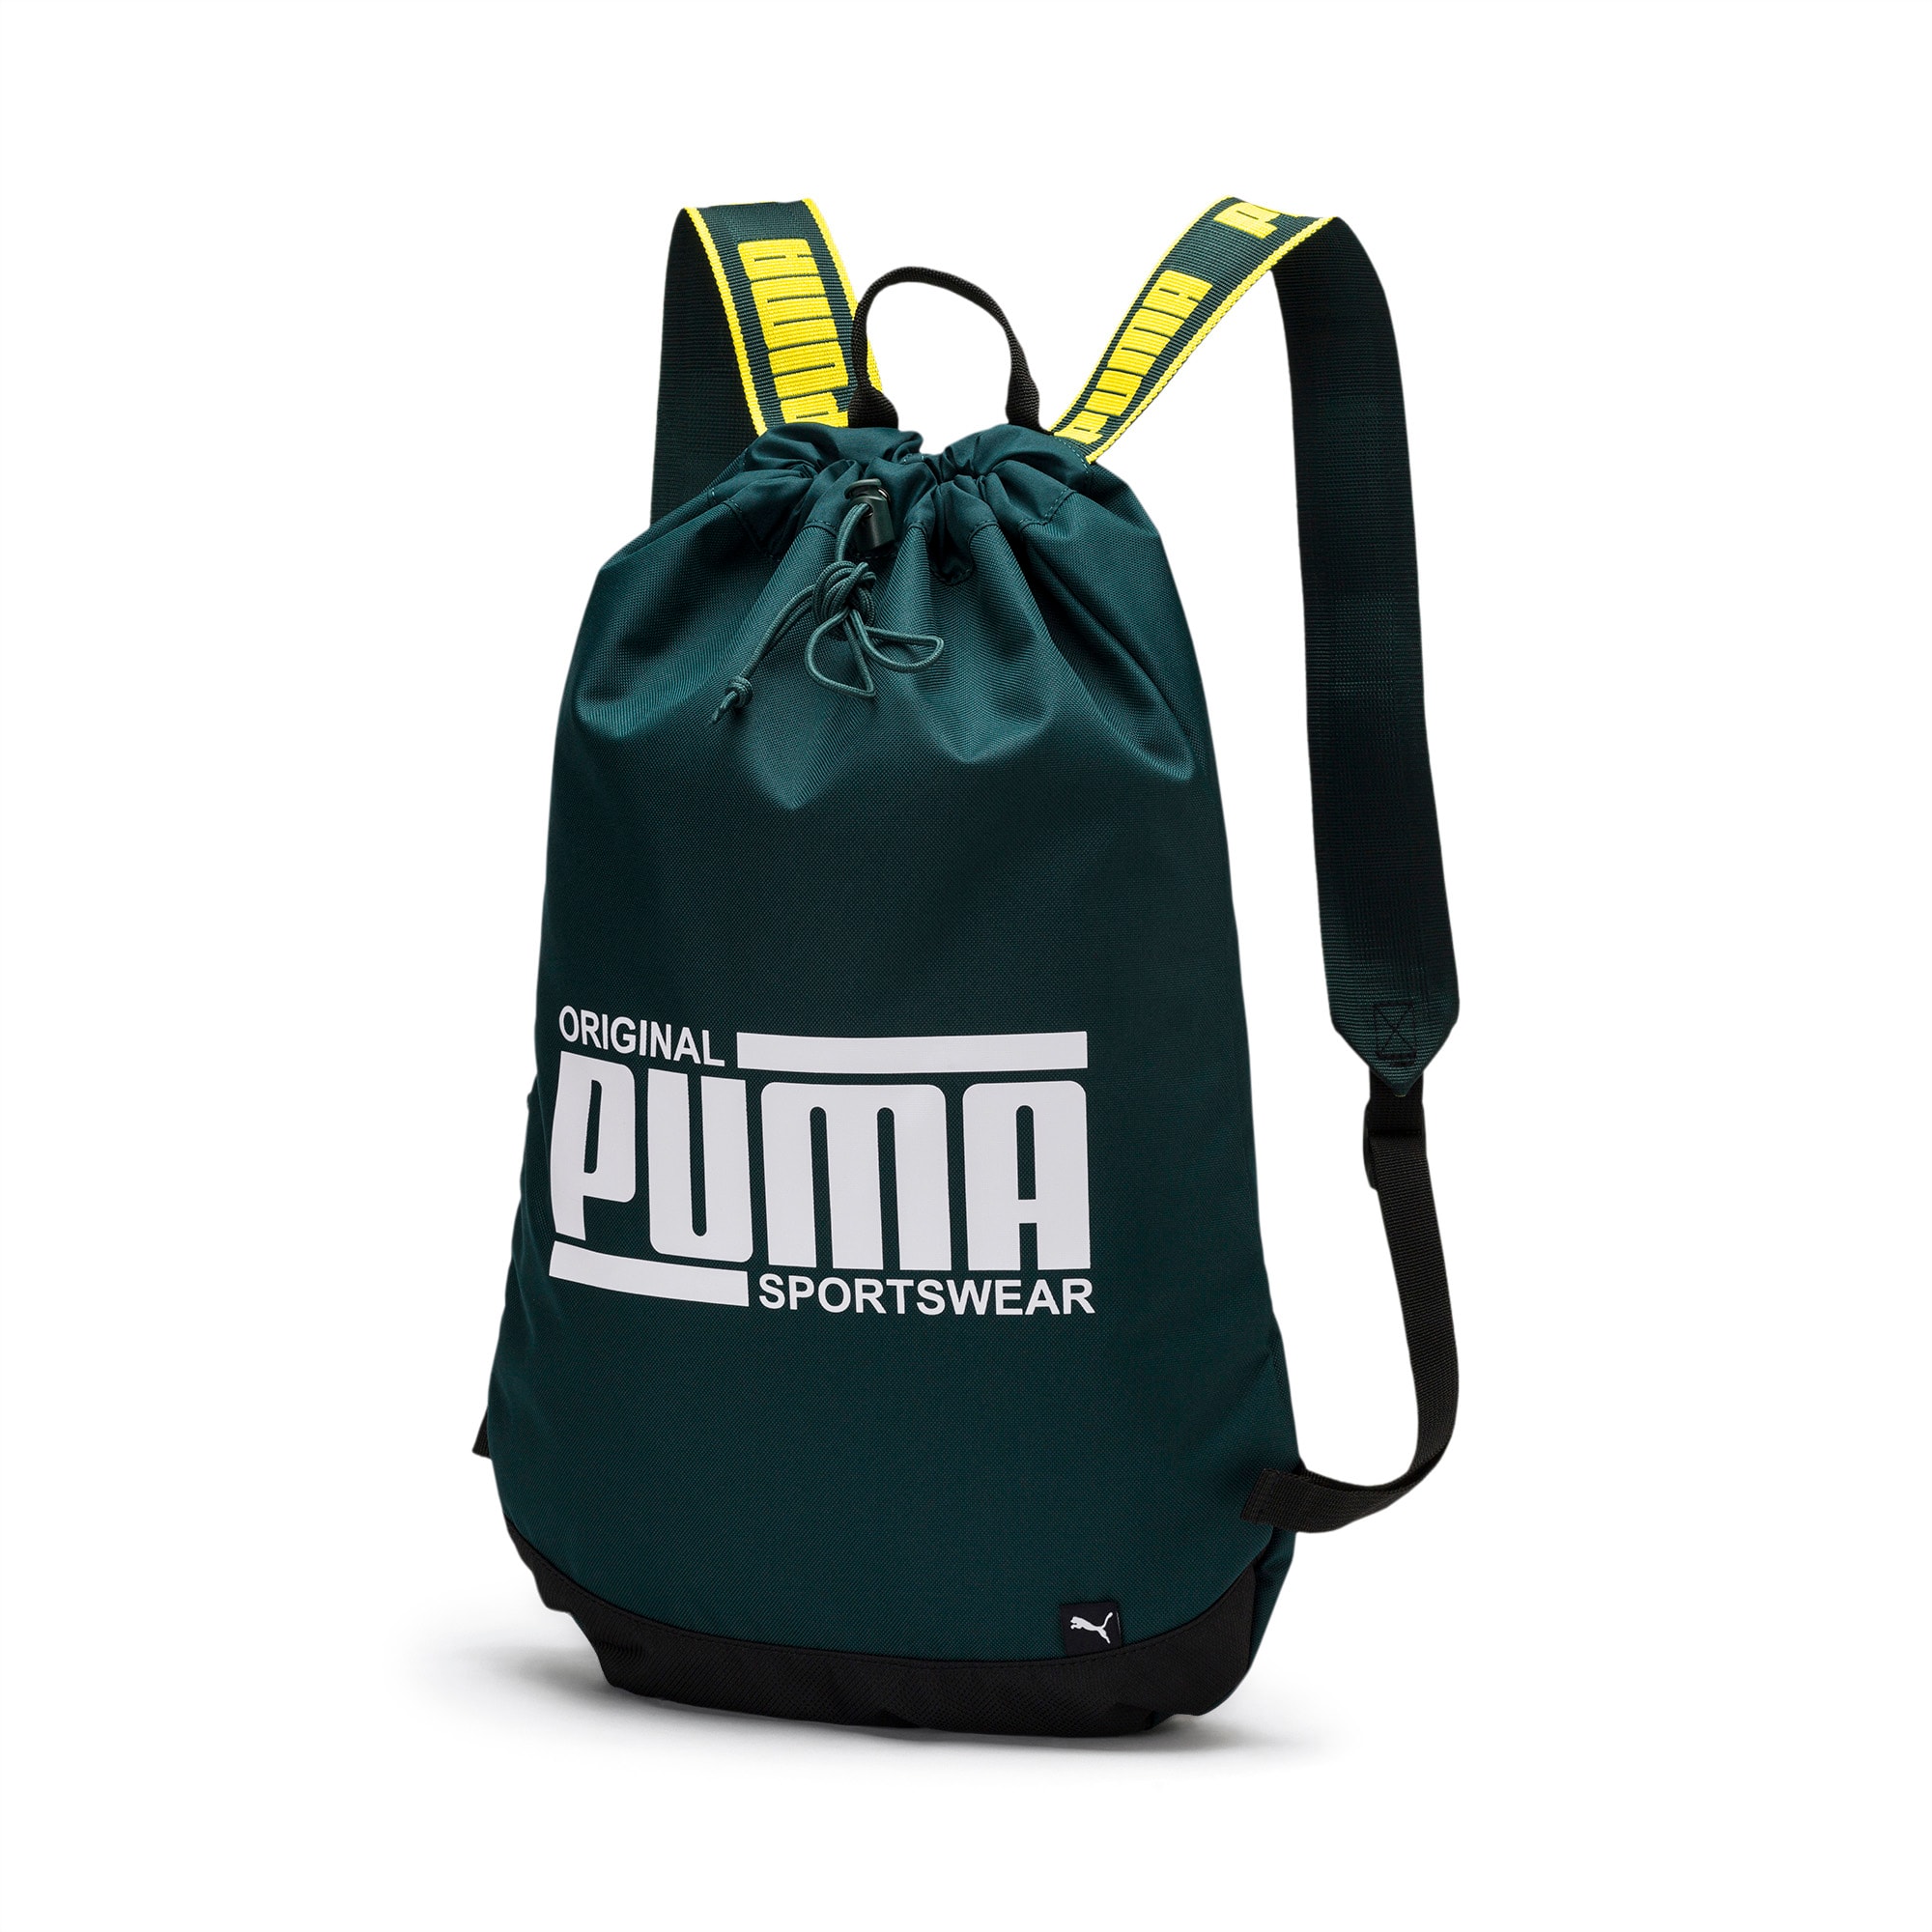 puma bookbags yellow